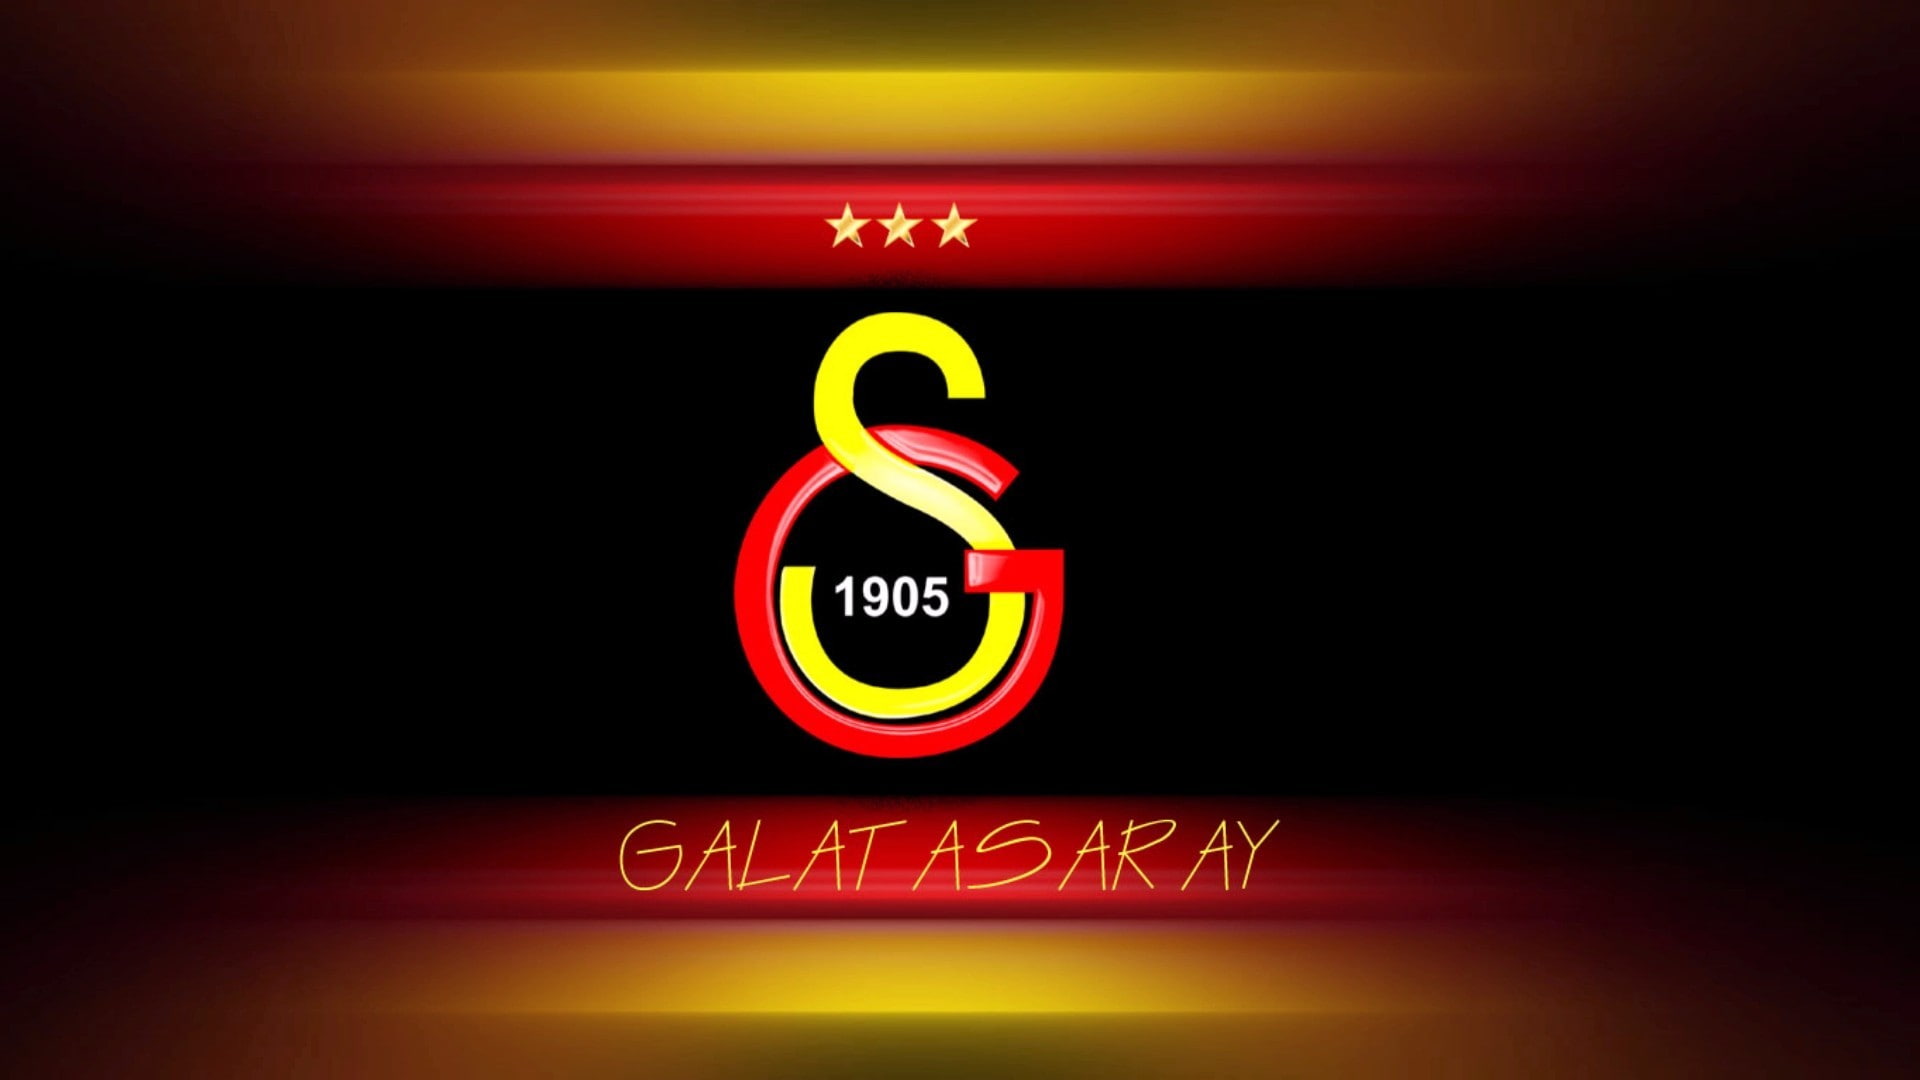 Galatasaray S.K., illuminated, neon, text, communication, western script